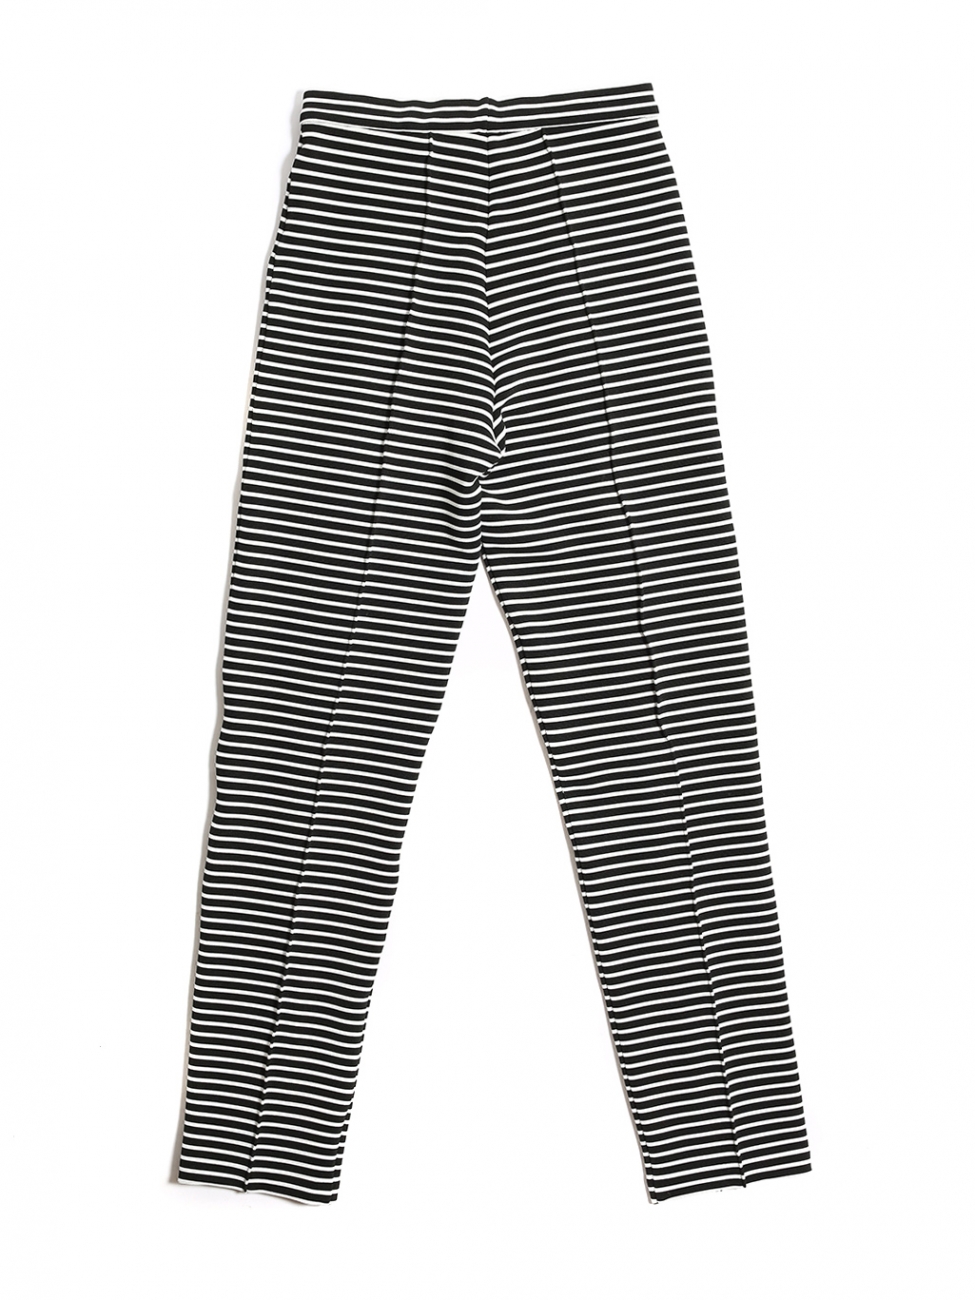 black pants with thin white stripes